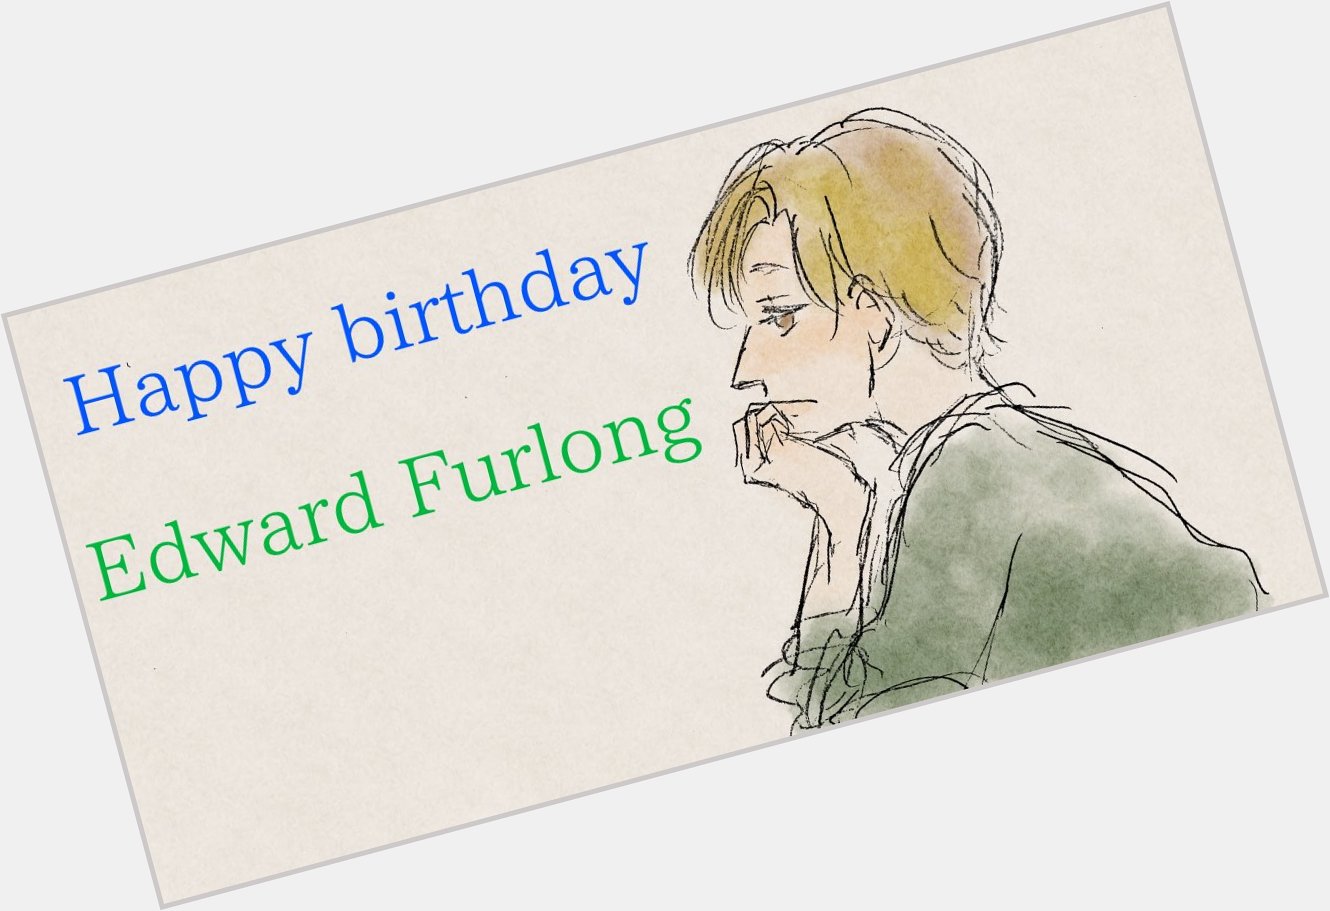 Happy birthday Edward Furlong !                                